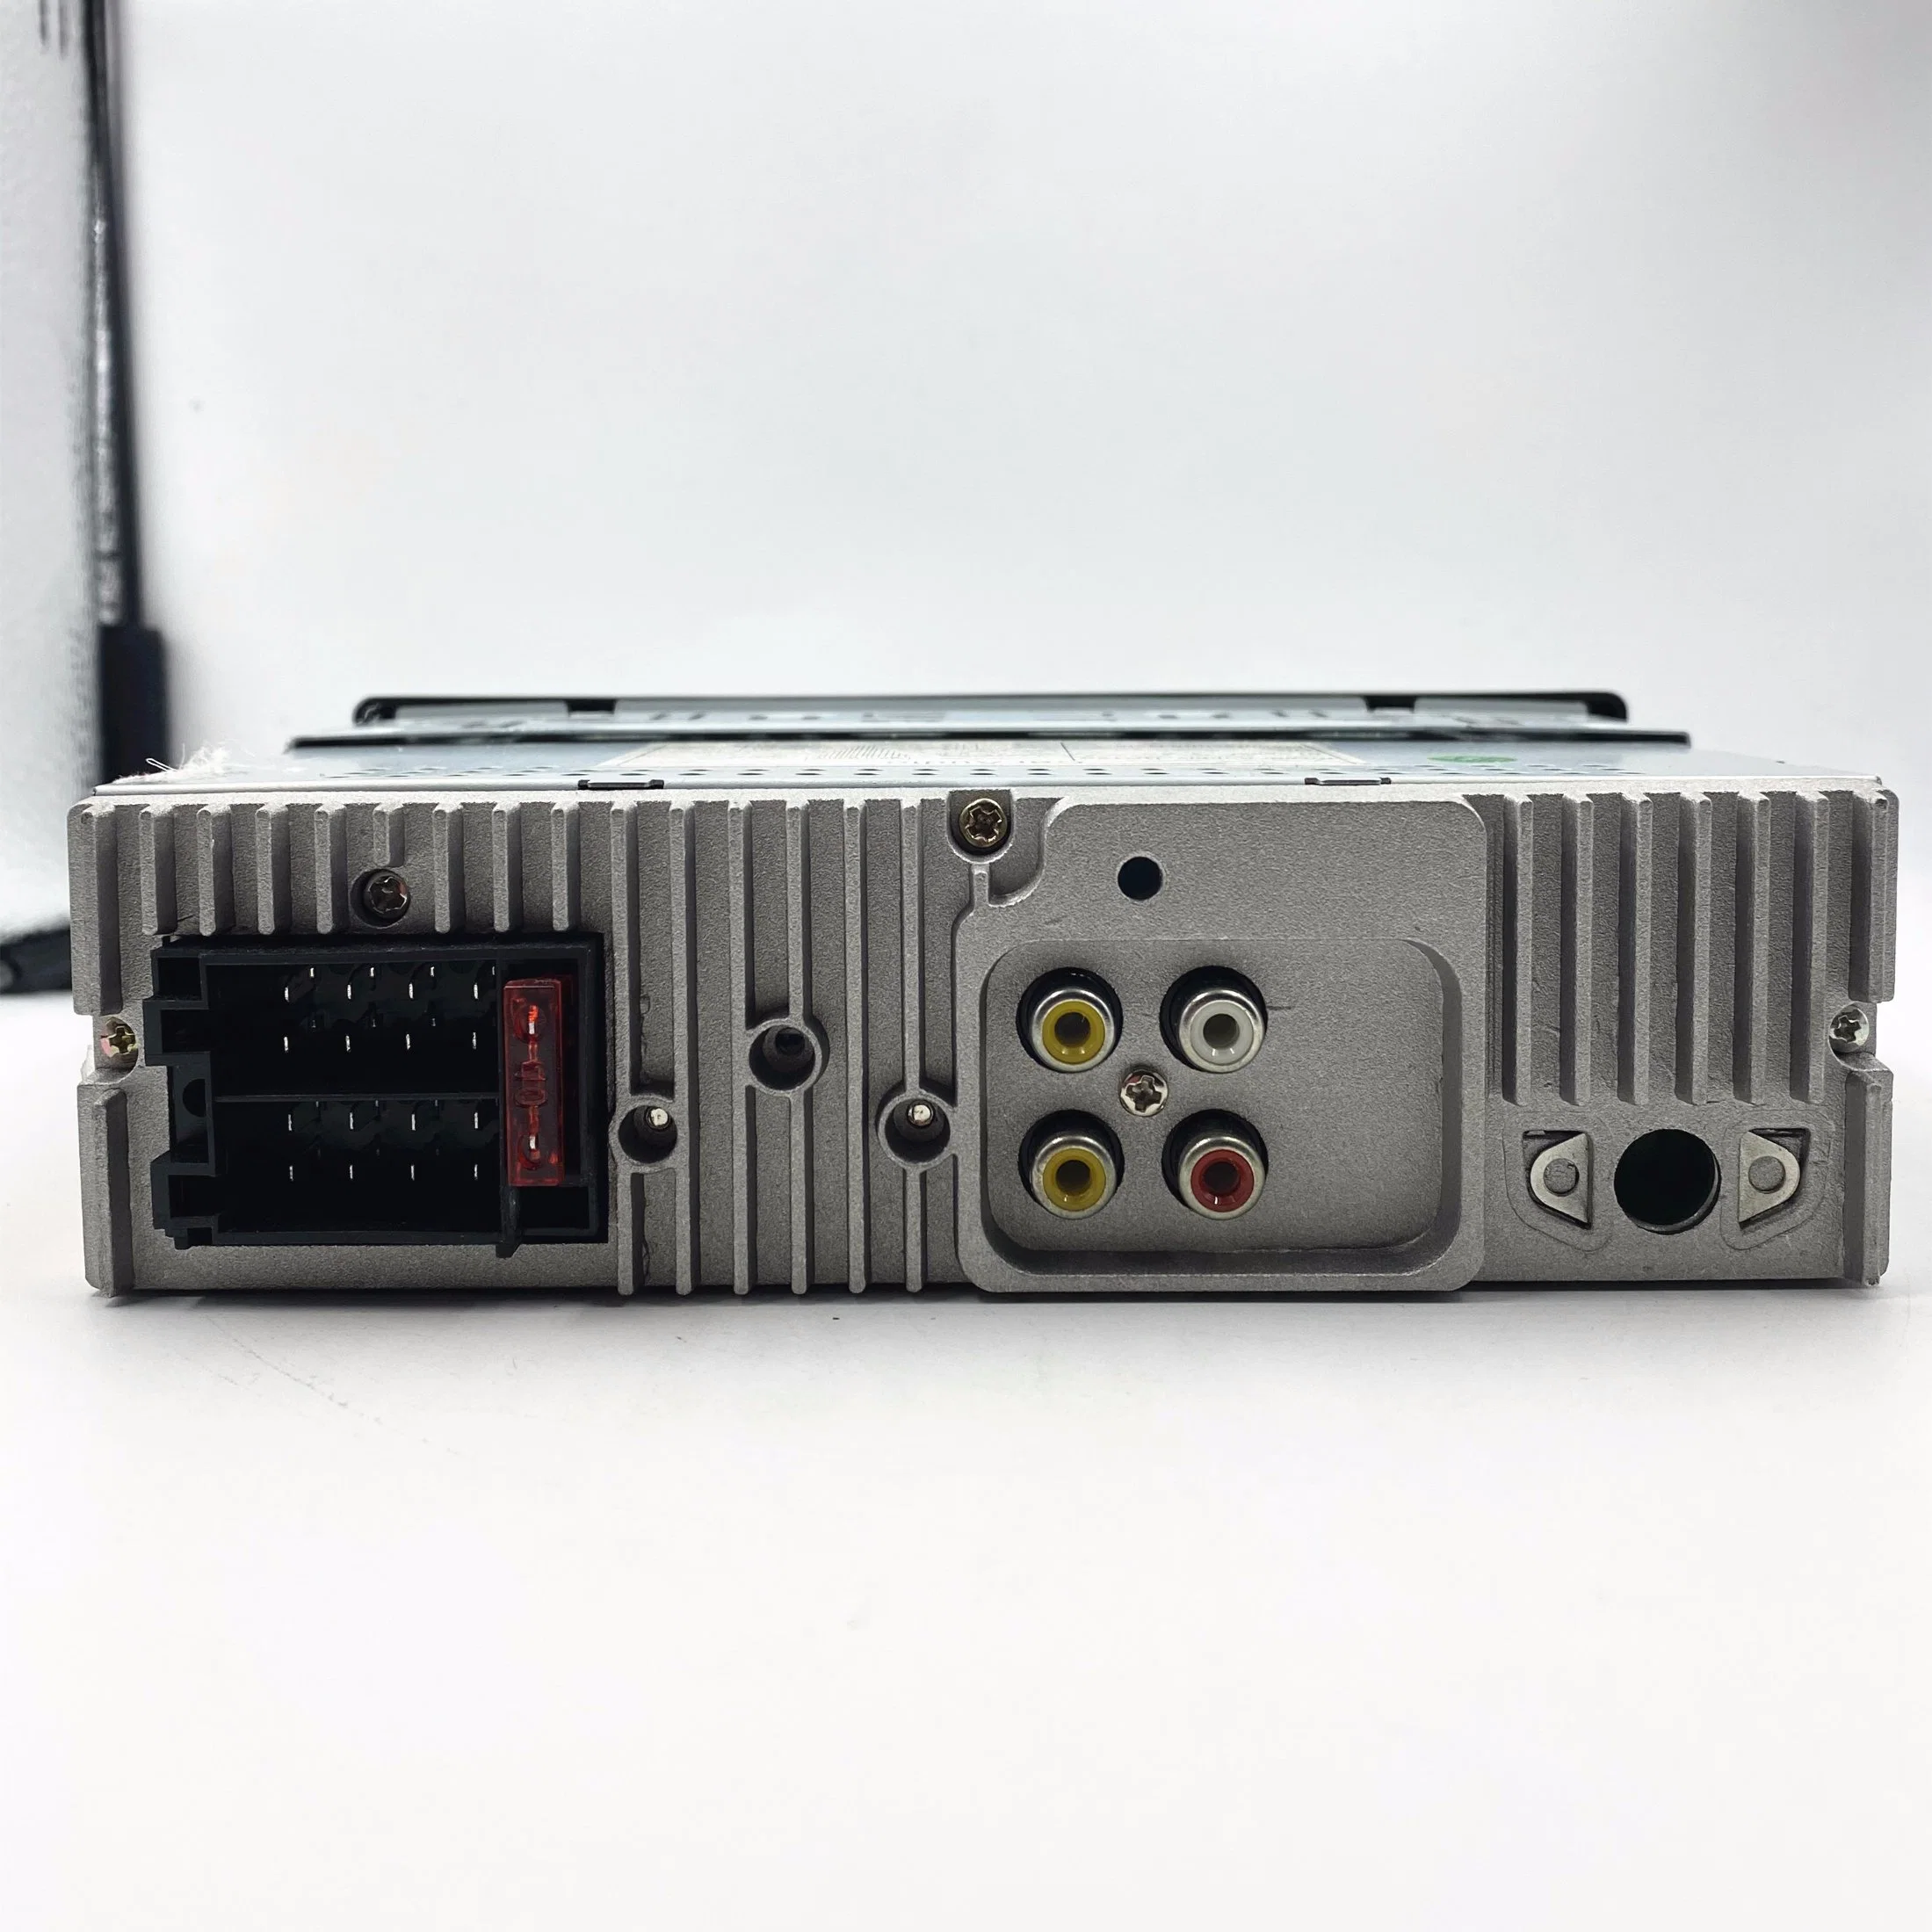 Car Bluetooth MP5 FM Transmitter Digital Player with Remote